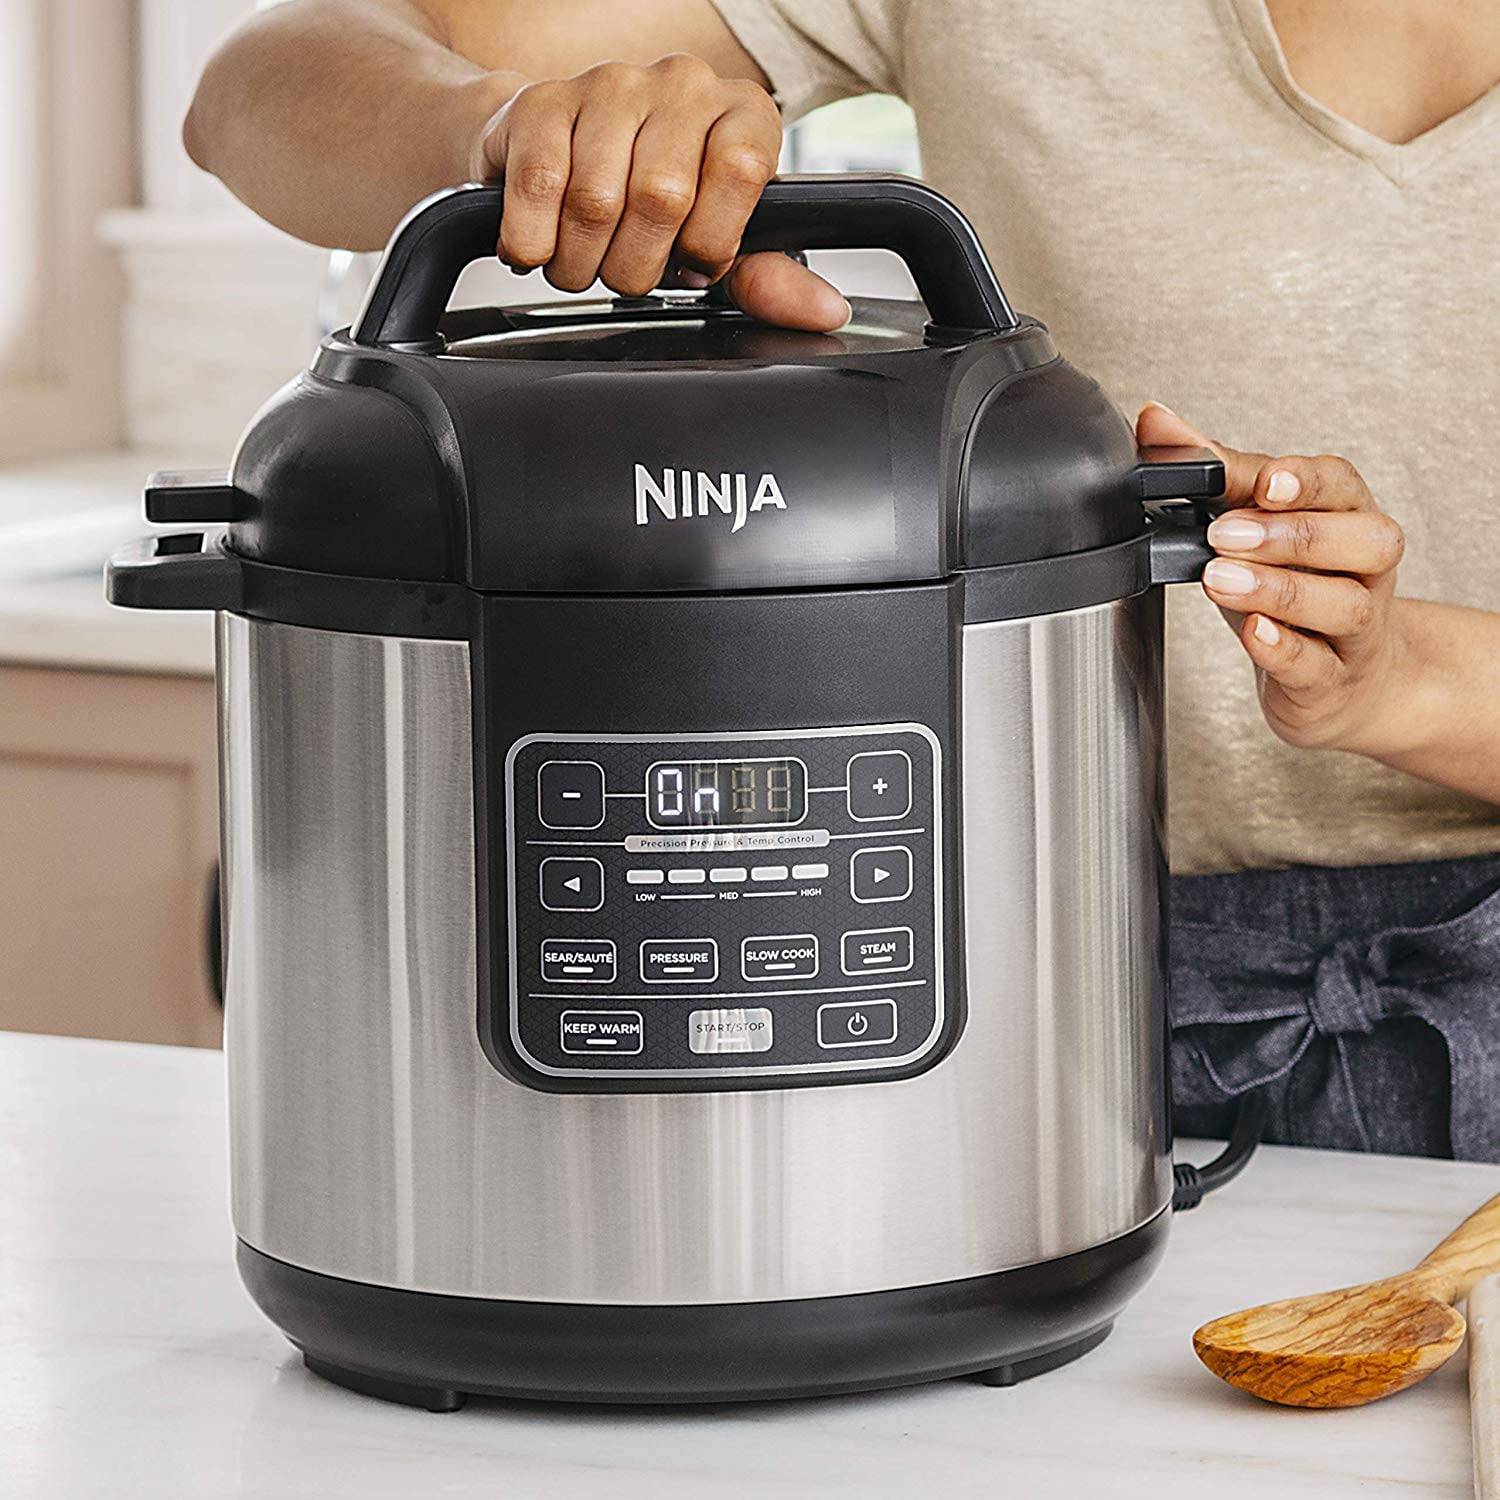 Ninja Pressure Cooker and Air Fryer on Sale on